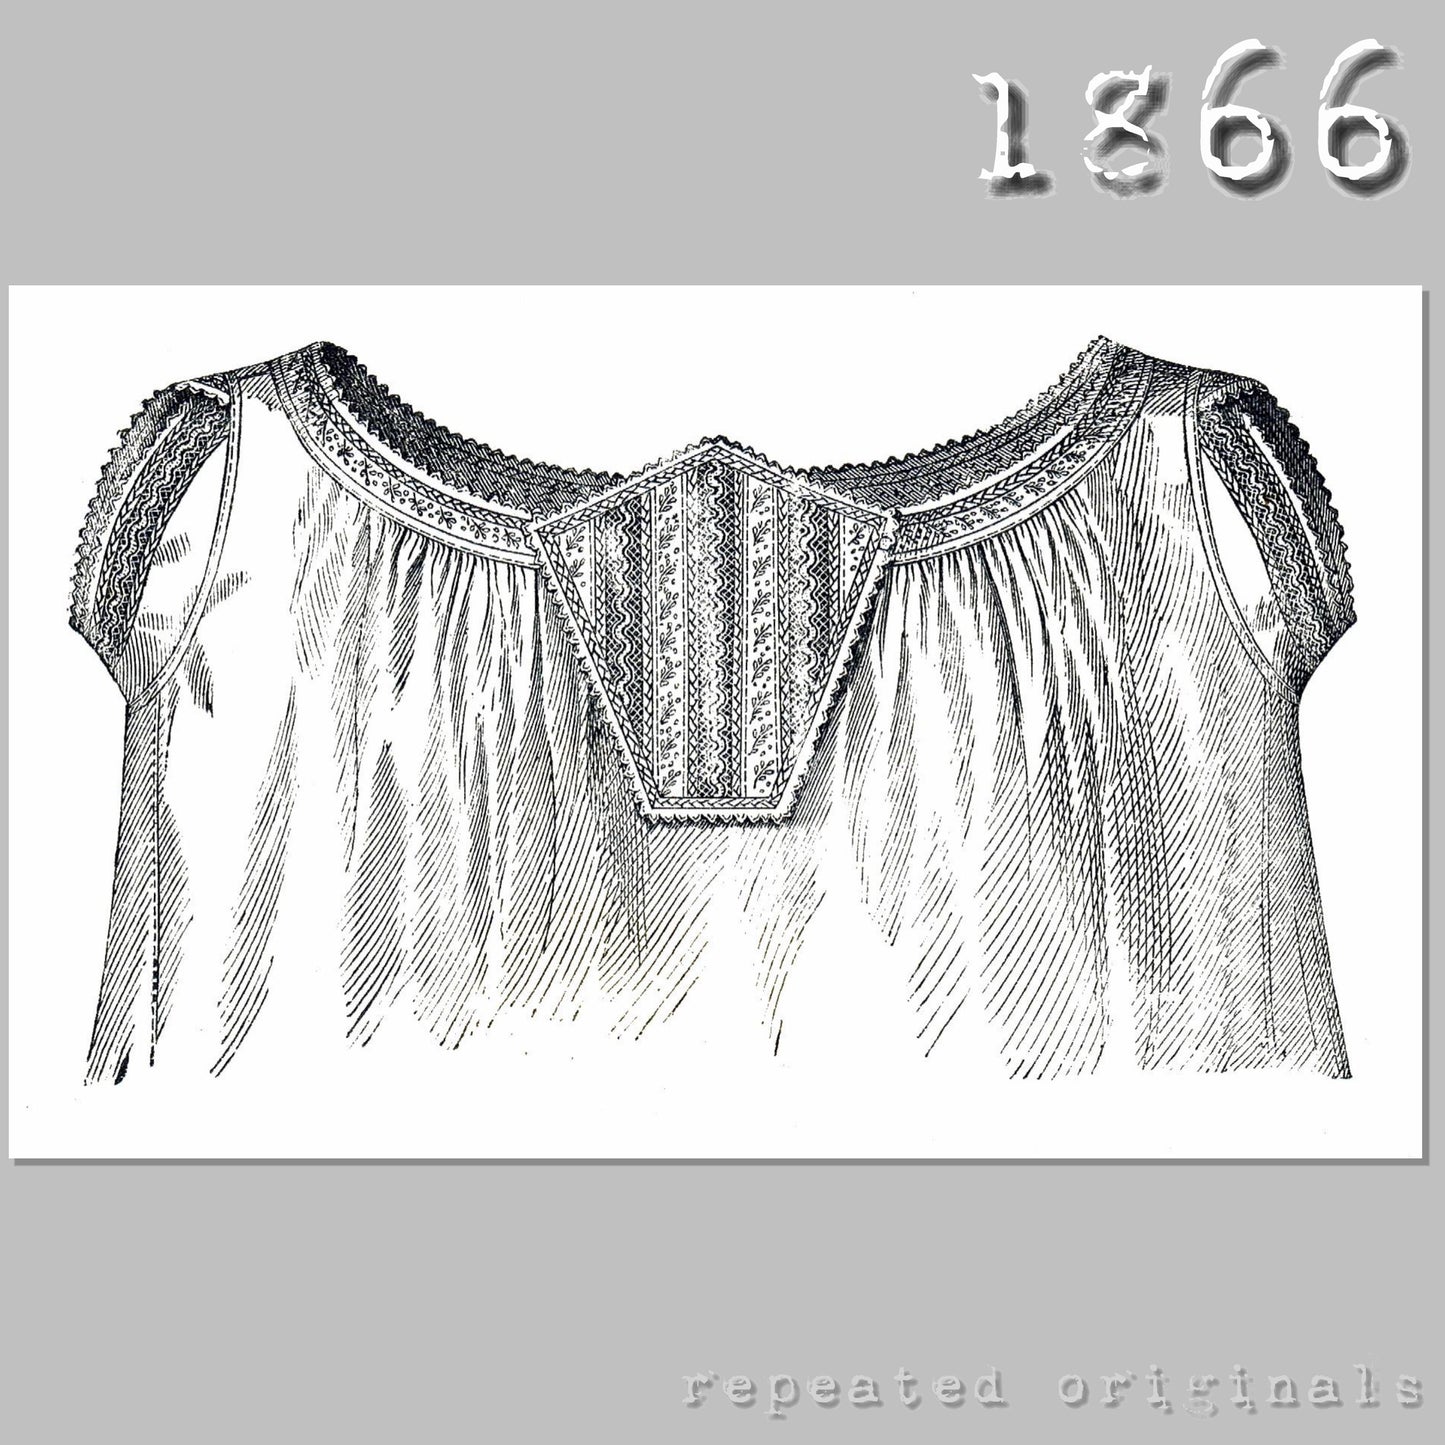 1866 Ladies' Chemise Sewing Pattern - INSTANT DOWNLOAD PDF